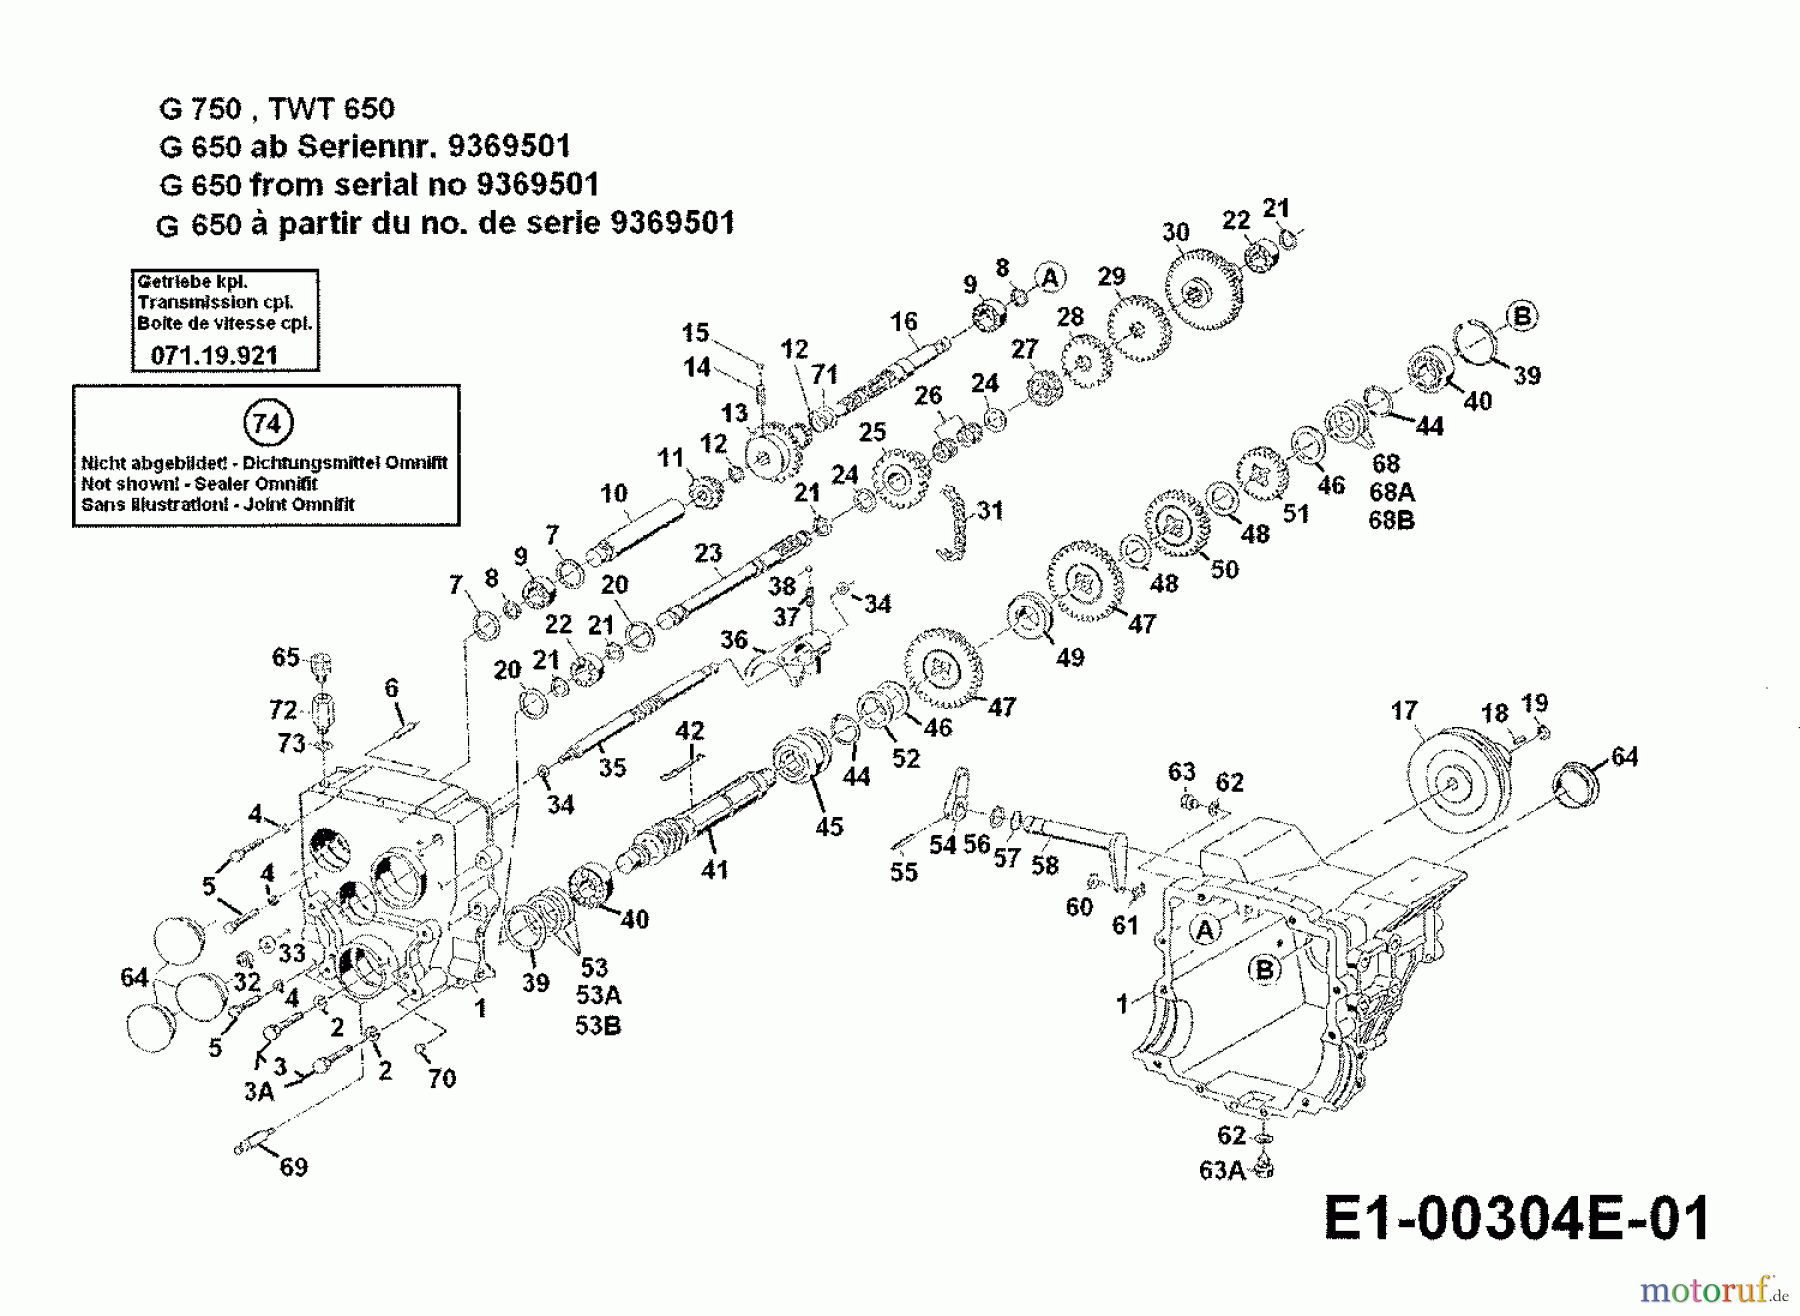  Gutbrod Einachser G 650 56A-650-604  (1998) Getriebe